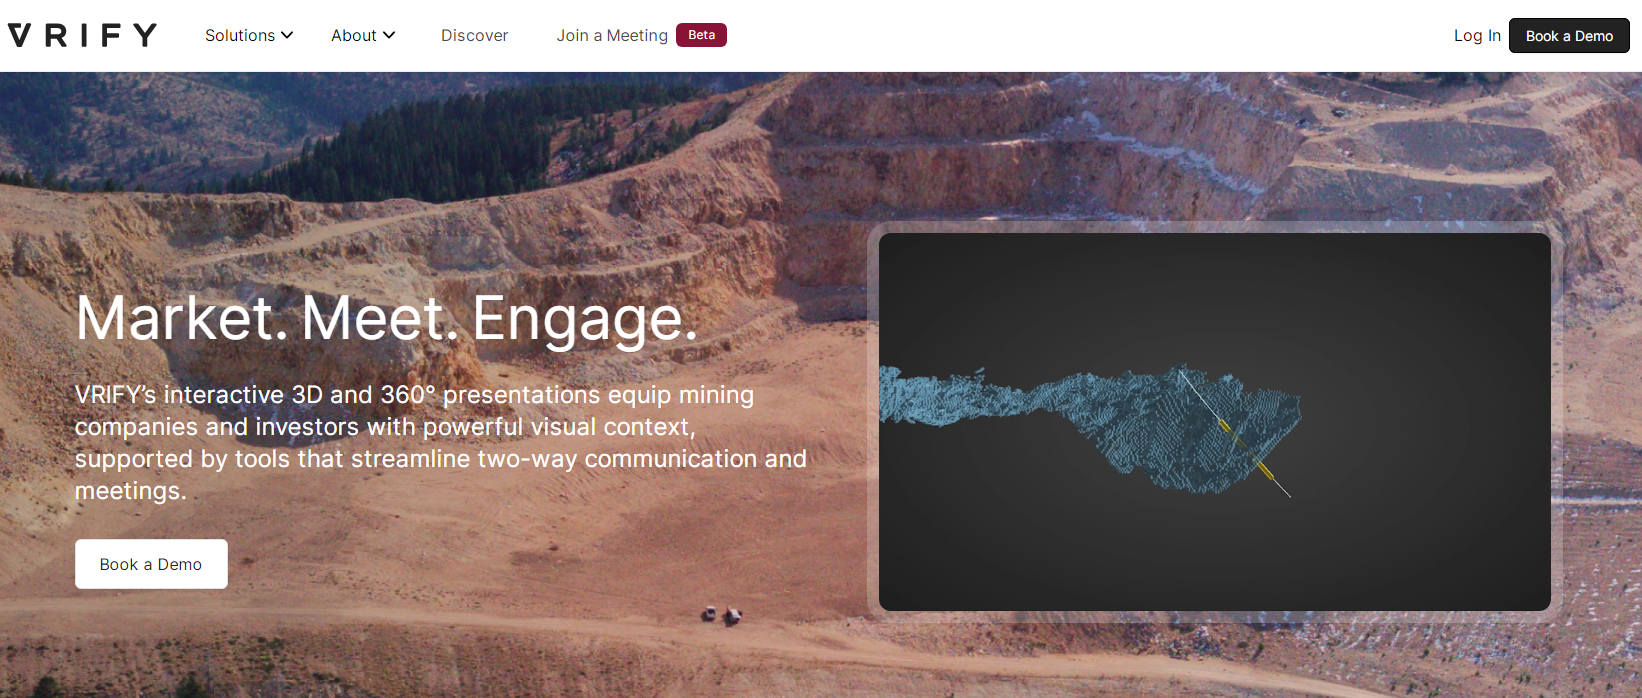 VRIFY Raises $6 Million in Series A Funding to Revolutionize Mining Communications Technology.